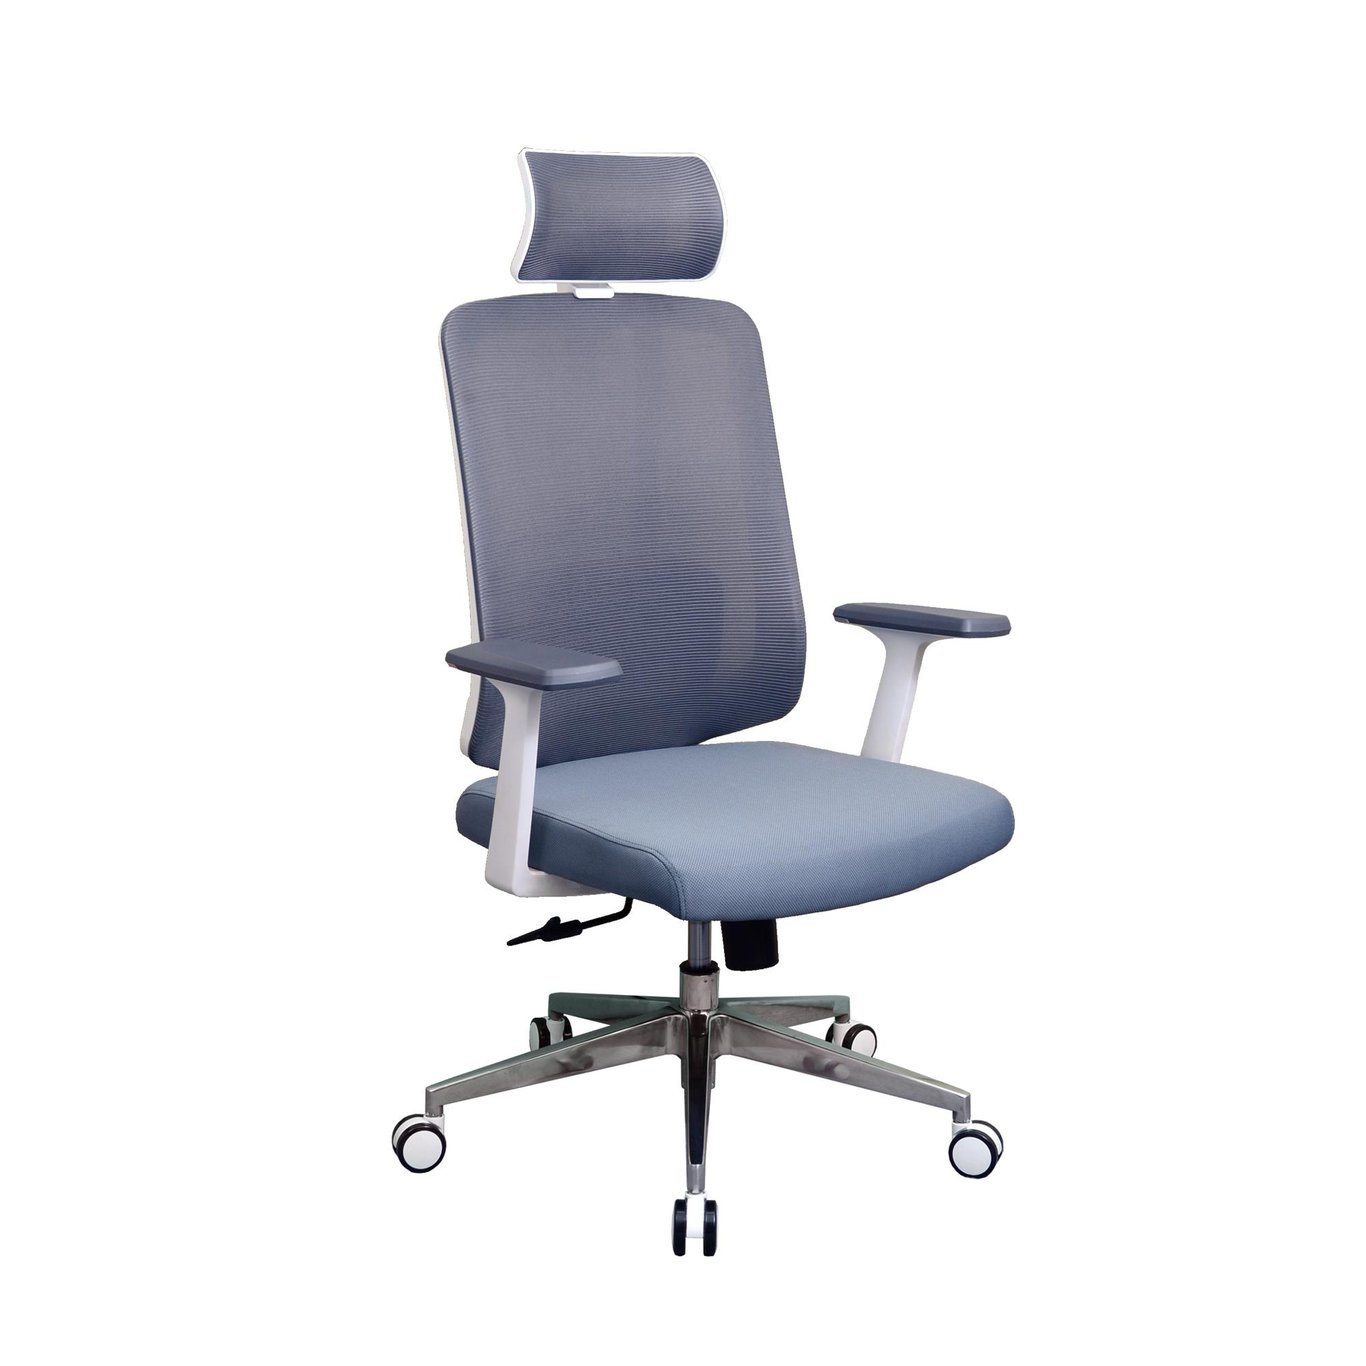 Zenox Joza Office Chair 辦公椅 - 灰色